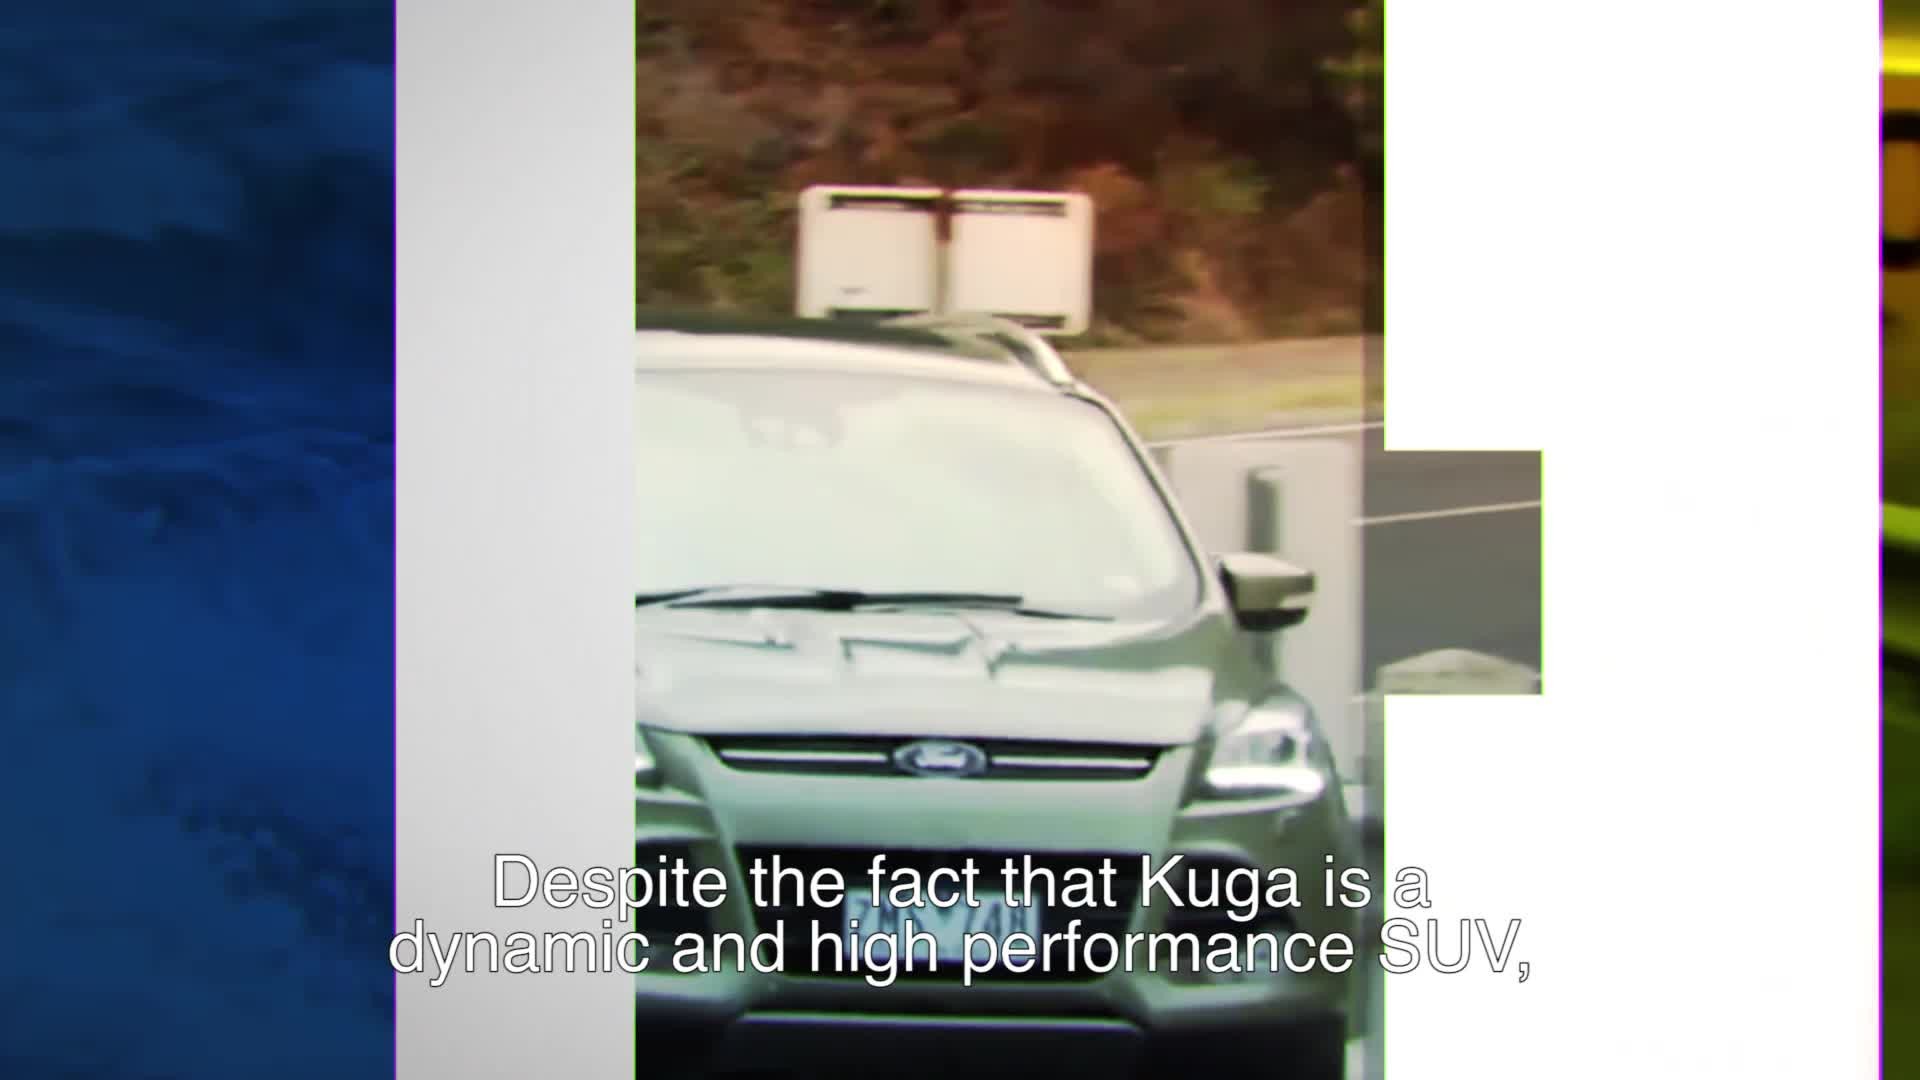 Kuga The Catcher Car